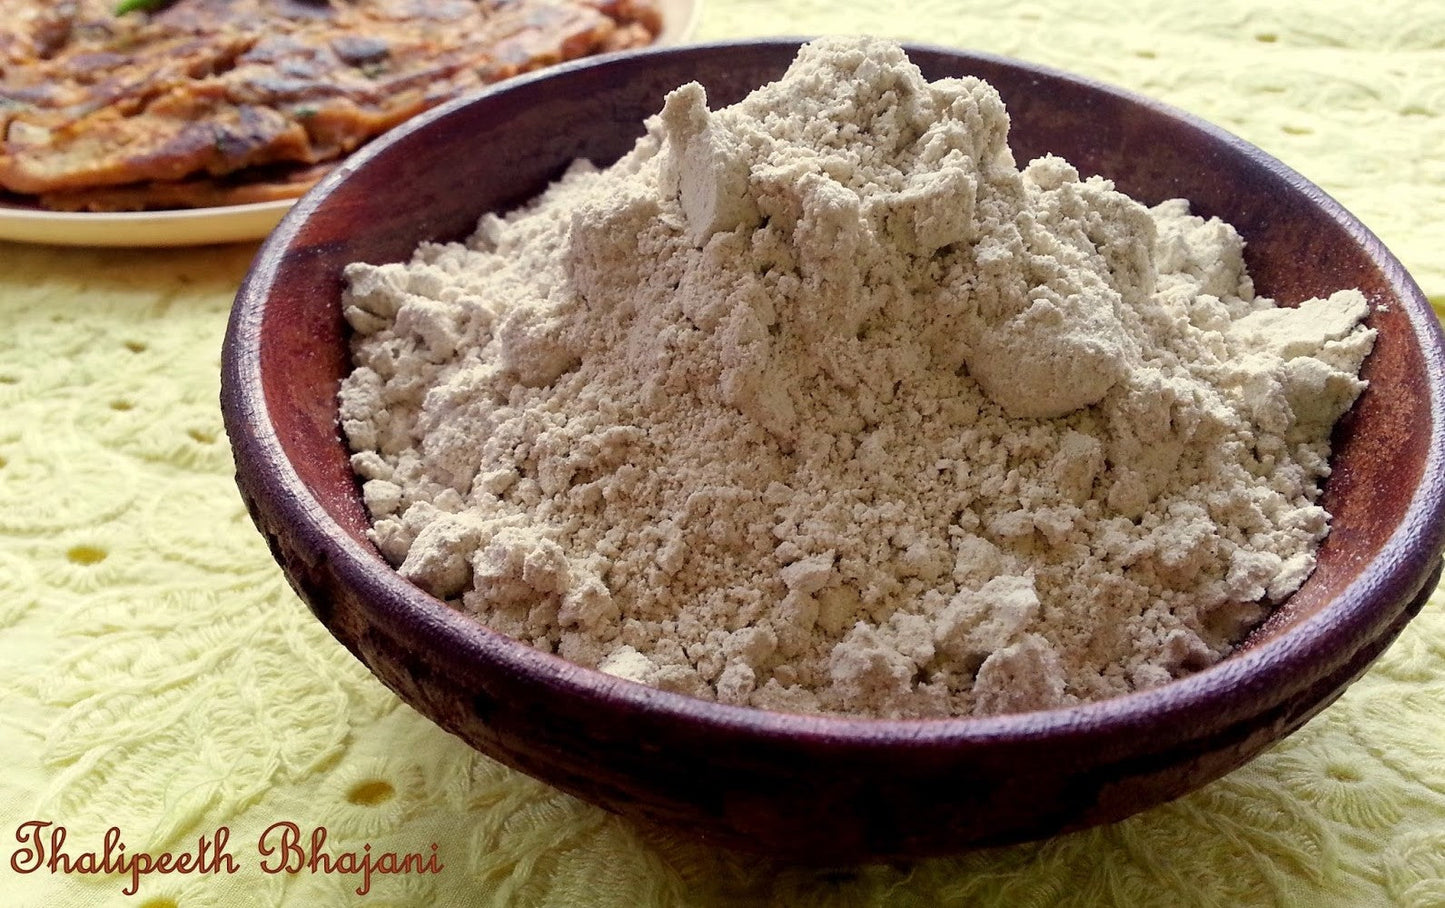 Thalipeeth Bhajani- 16 grains + 5 spices